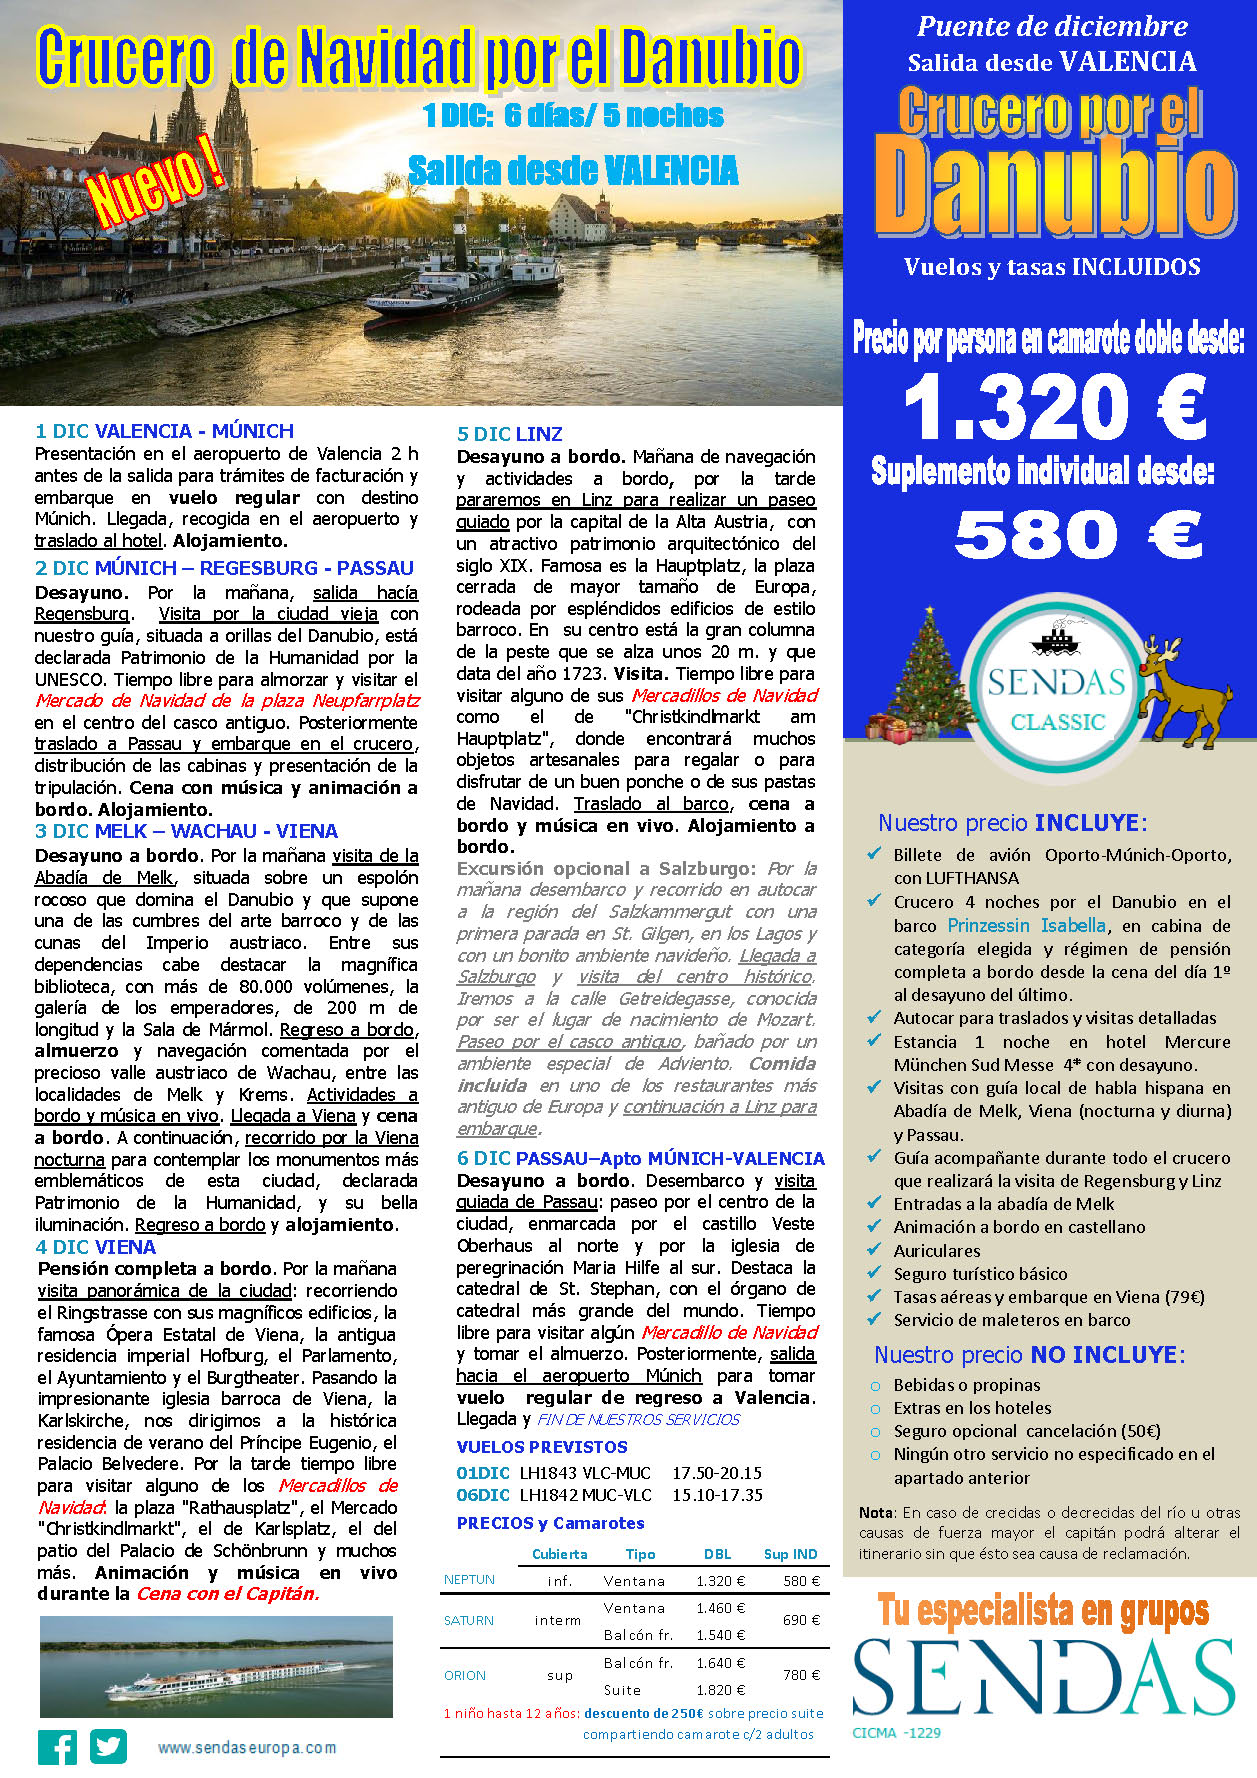 Ofertas Sendas Puente Diciembre 2023 crucero Danubio 6 dias salida 1 Diciembre vuelo directo desde Valencia